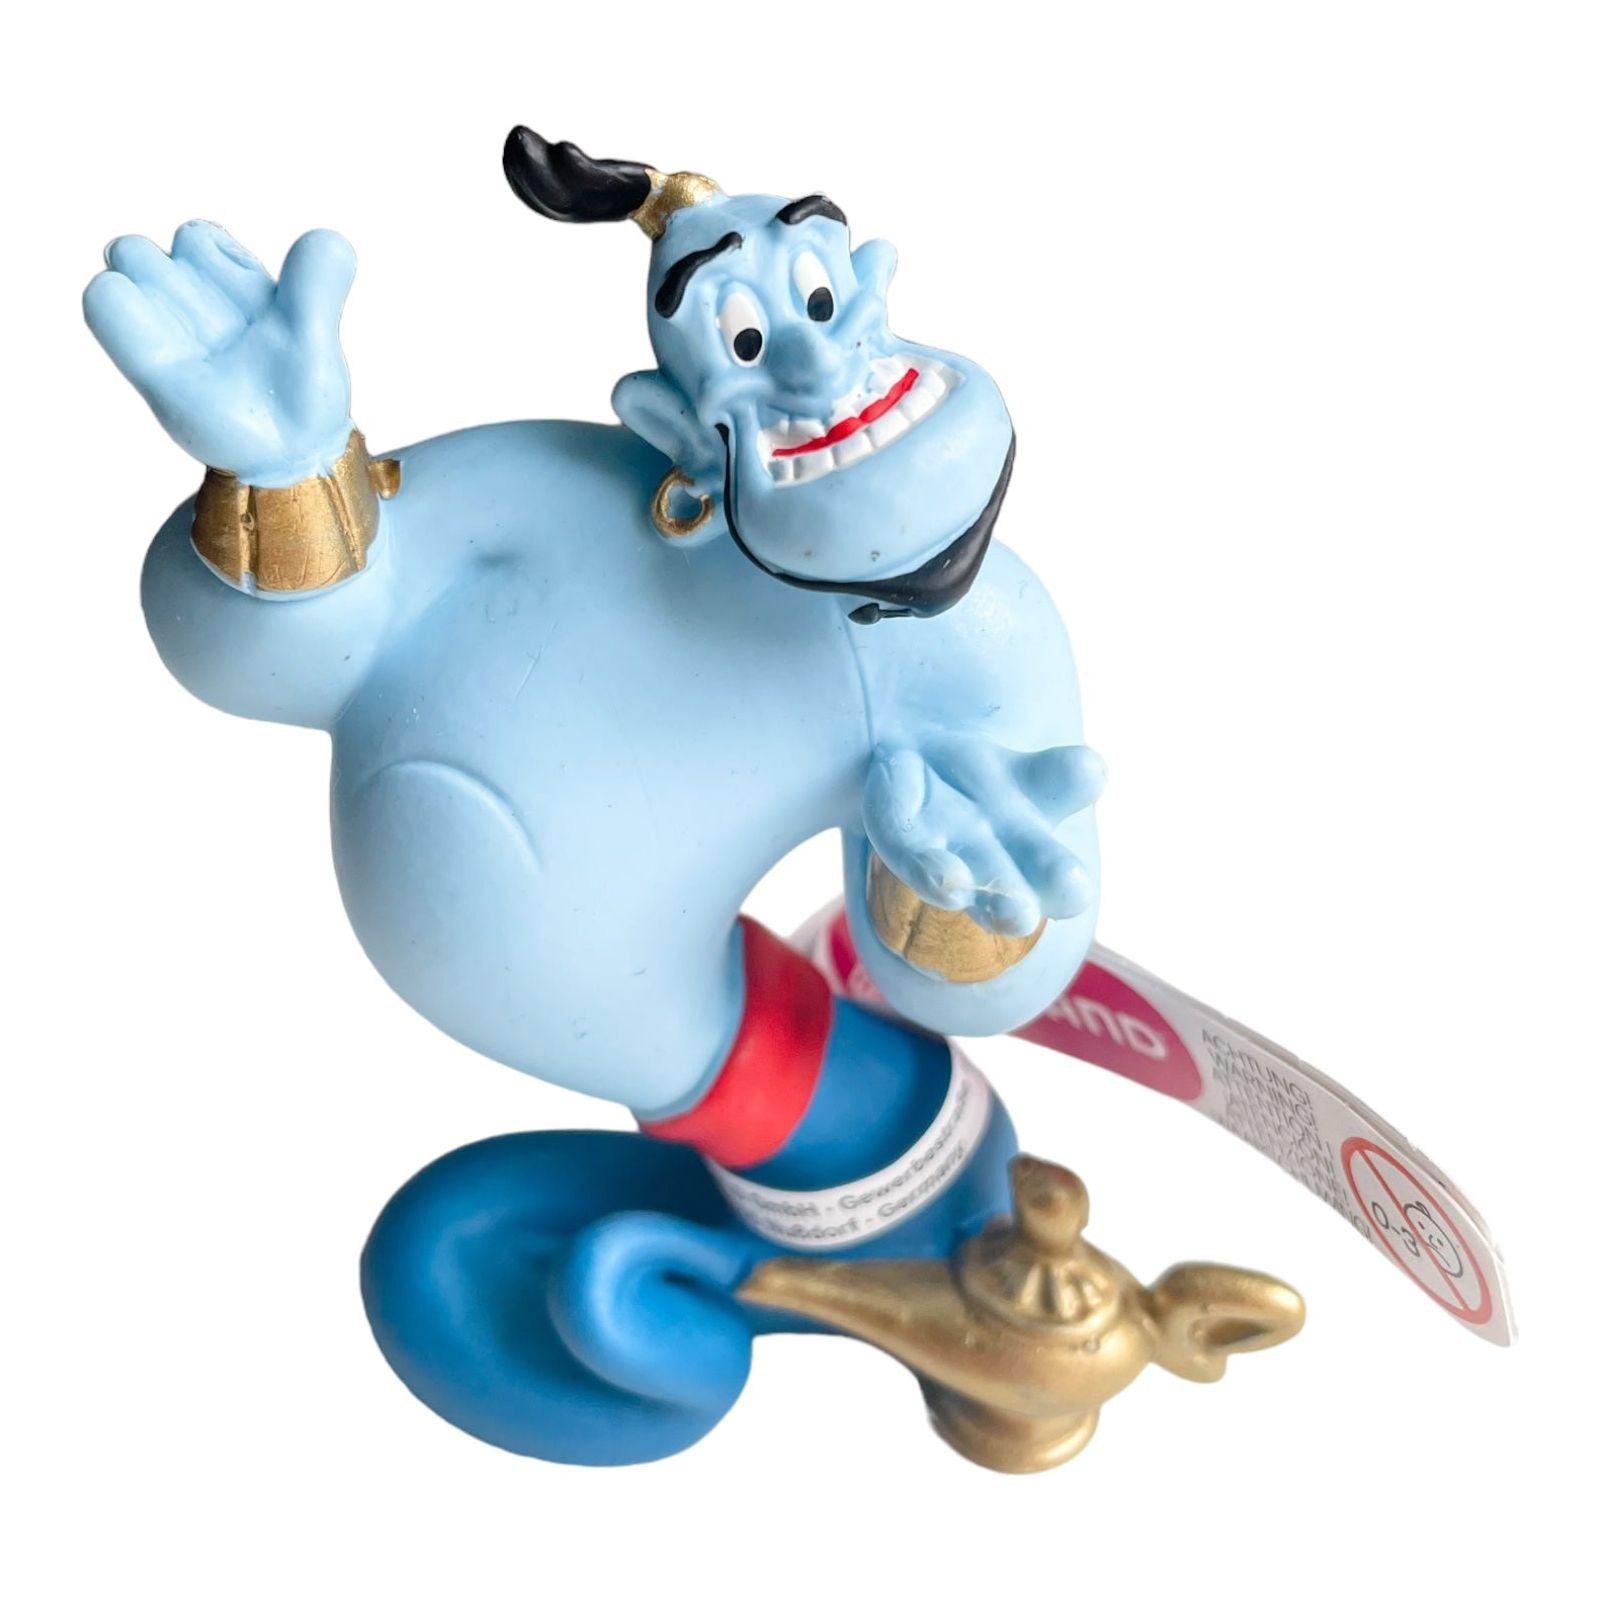 Figurine Disney Bullyland 12472 Le Genie Aladdin